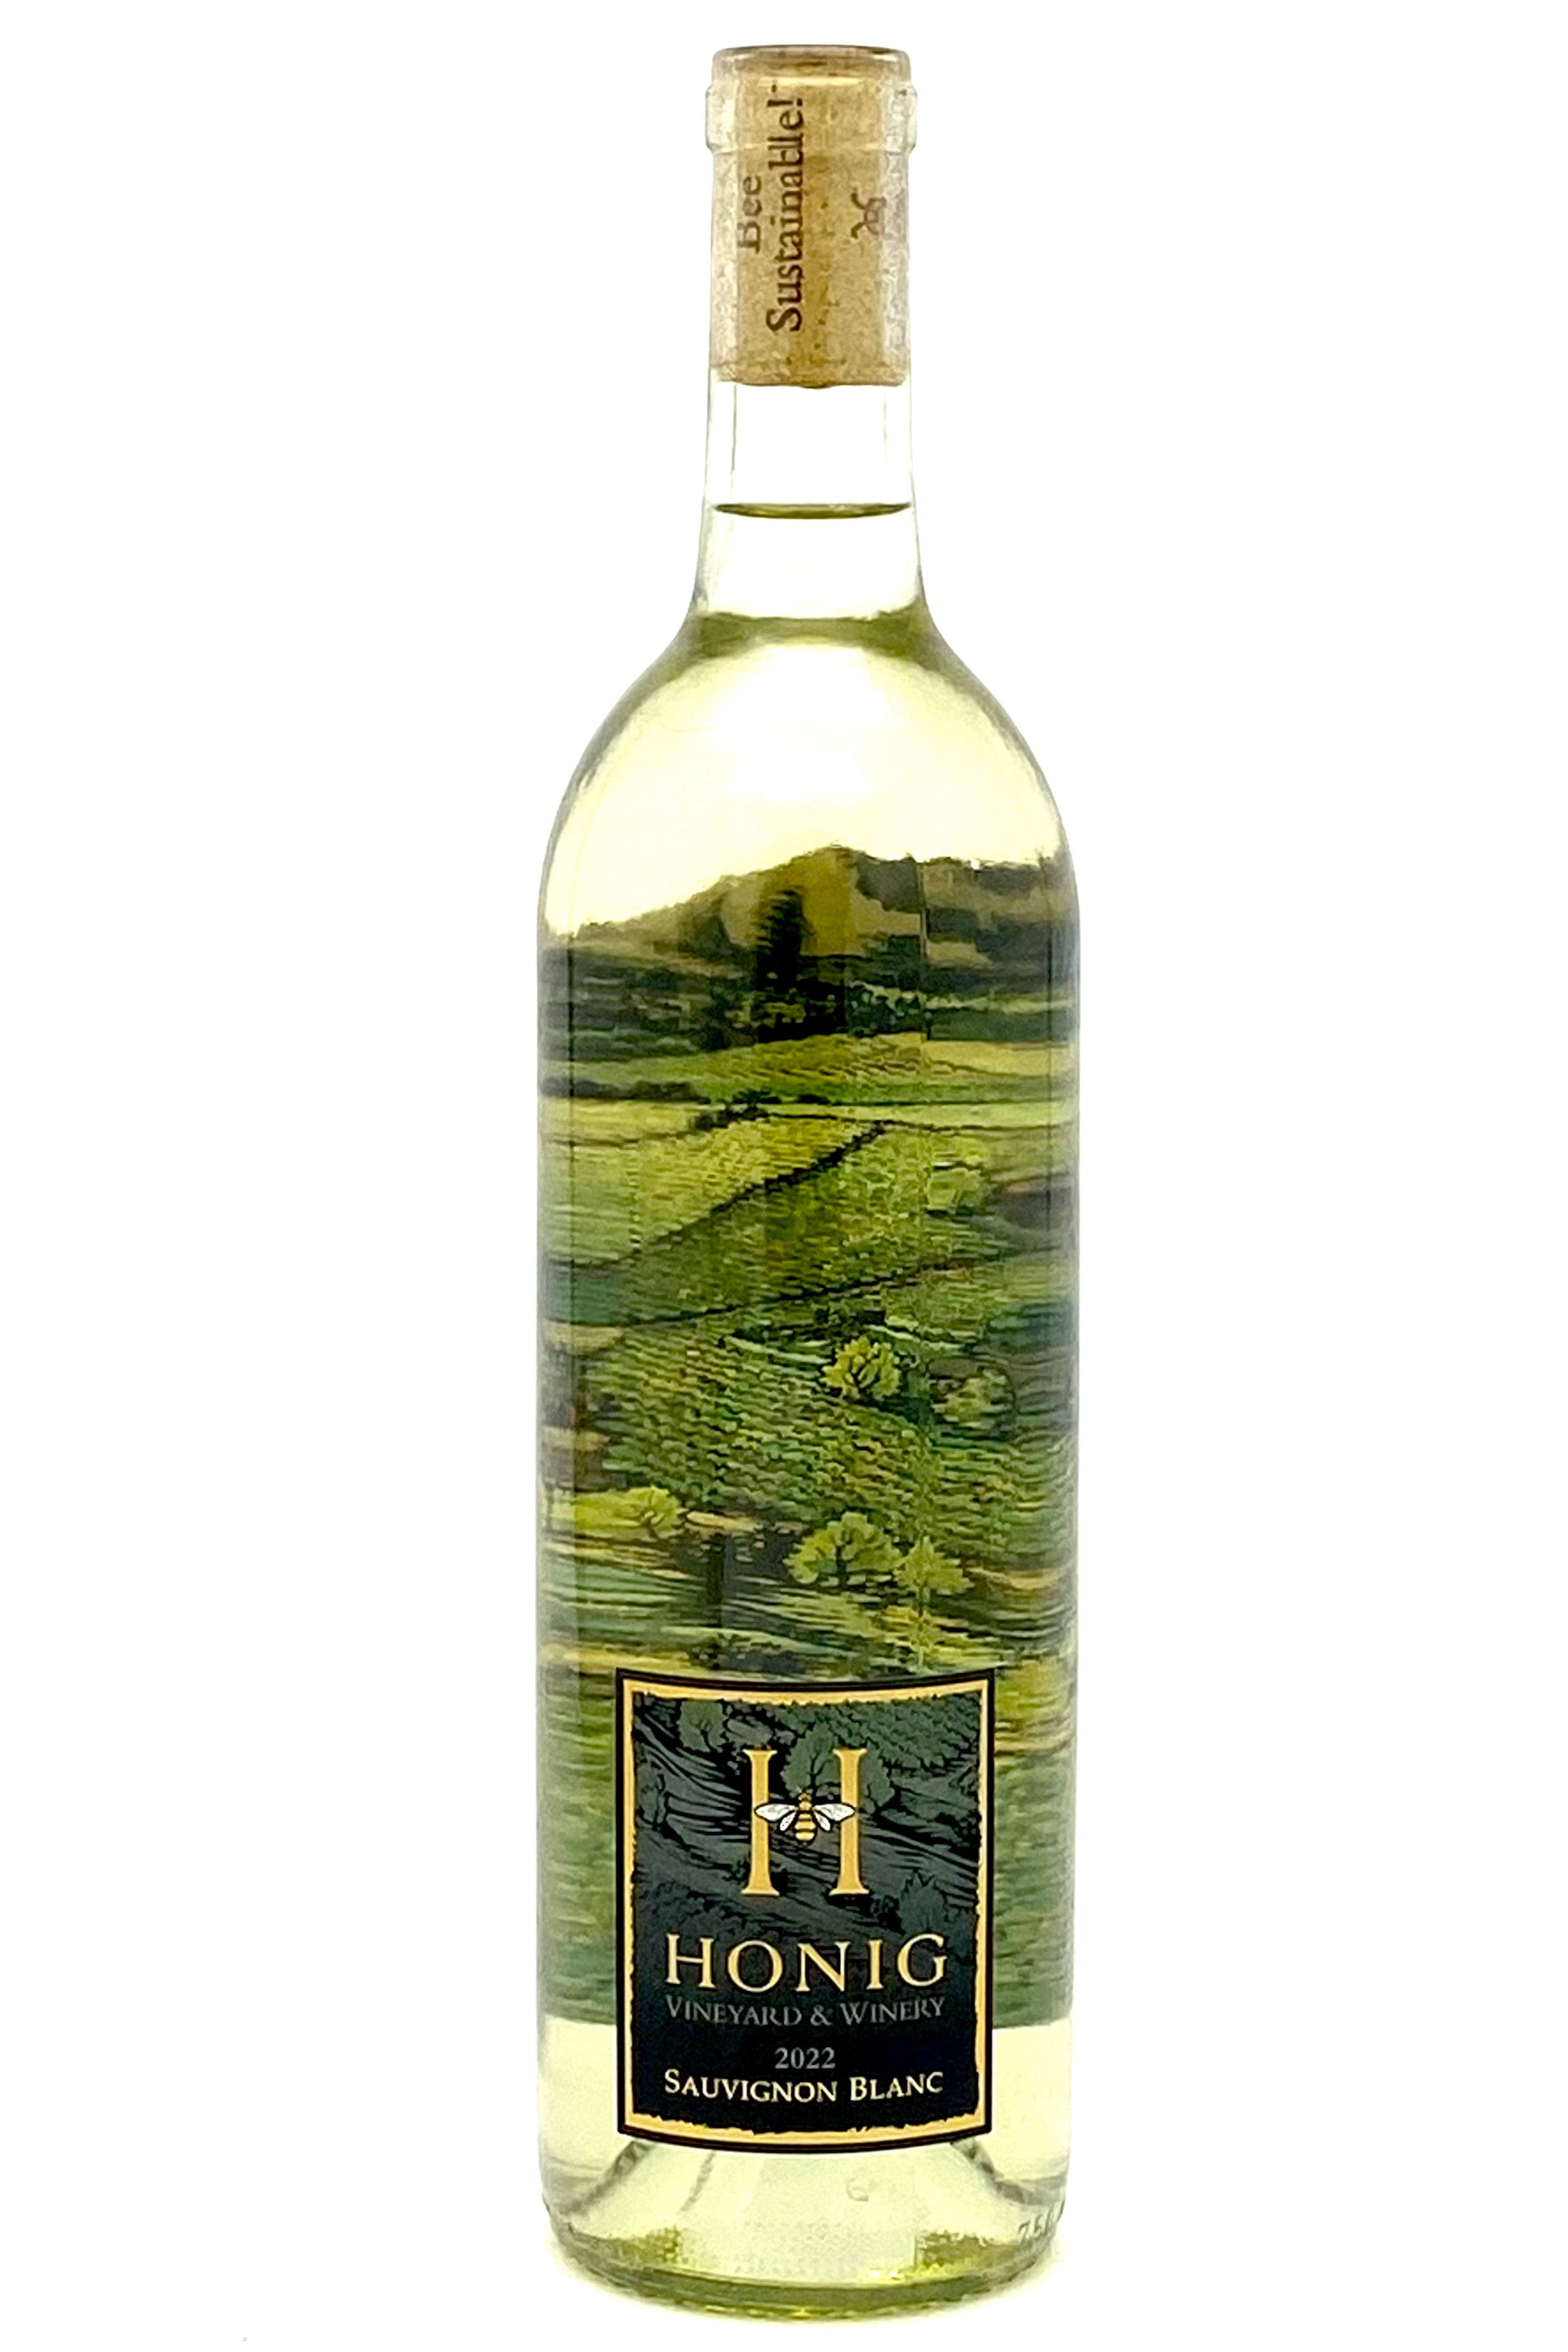 Honig Napa Valley Sauvignon Blanc Wine - 750ml